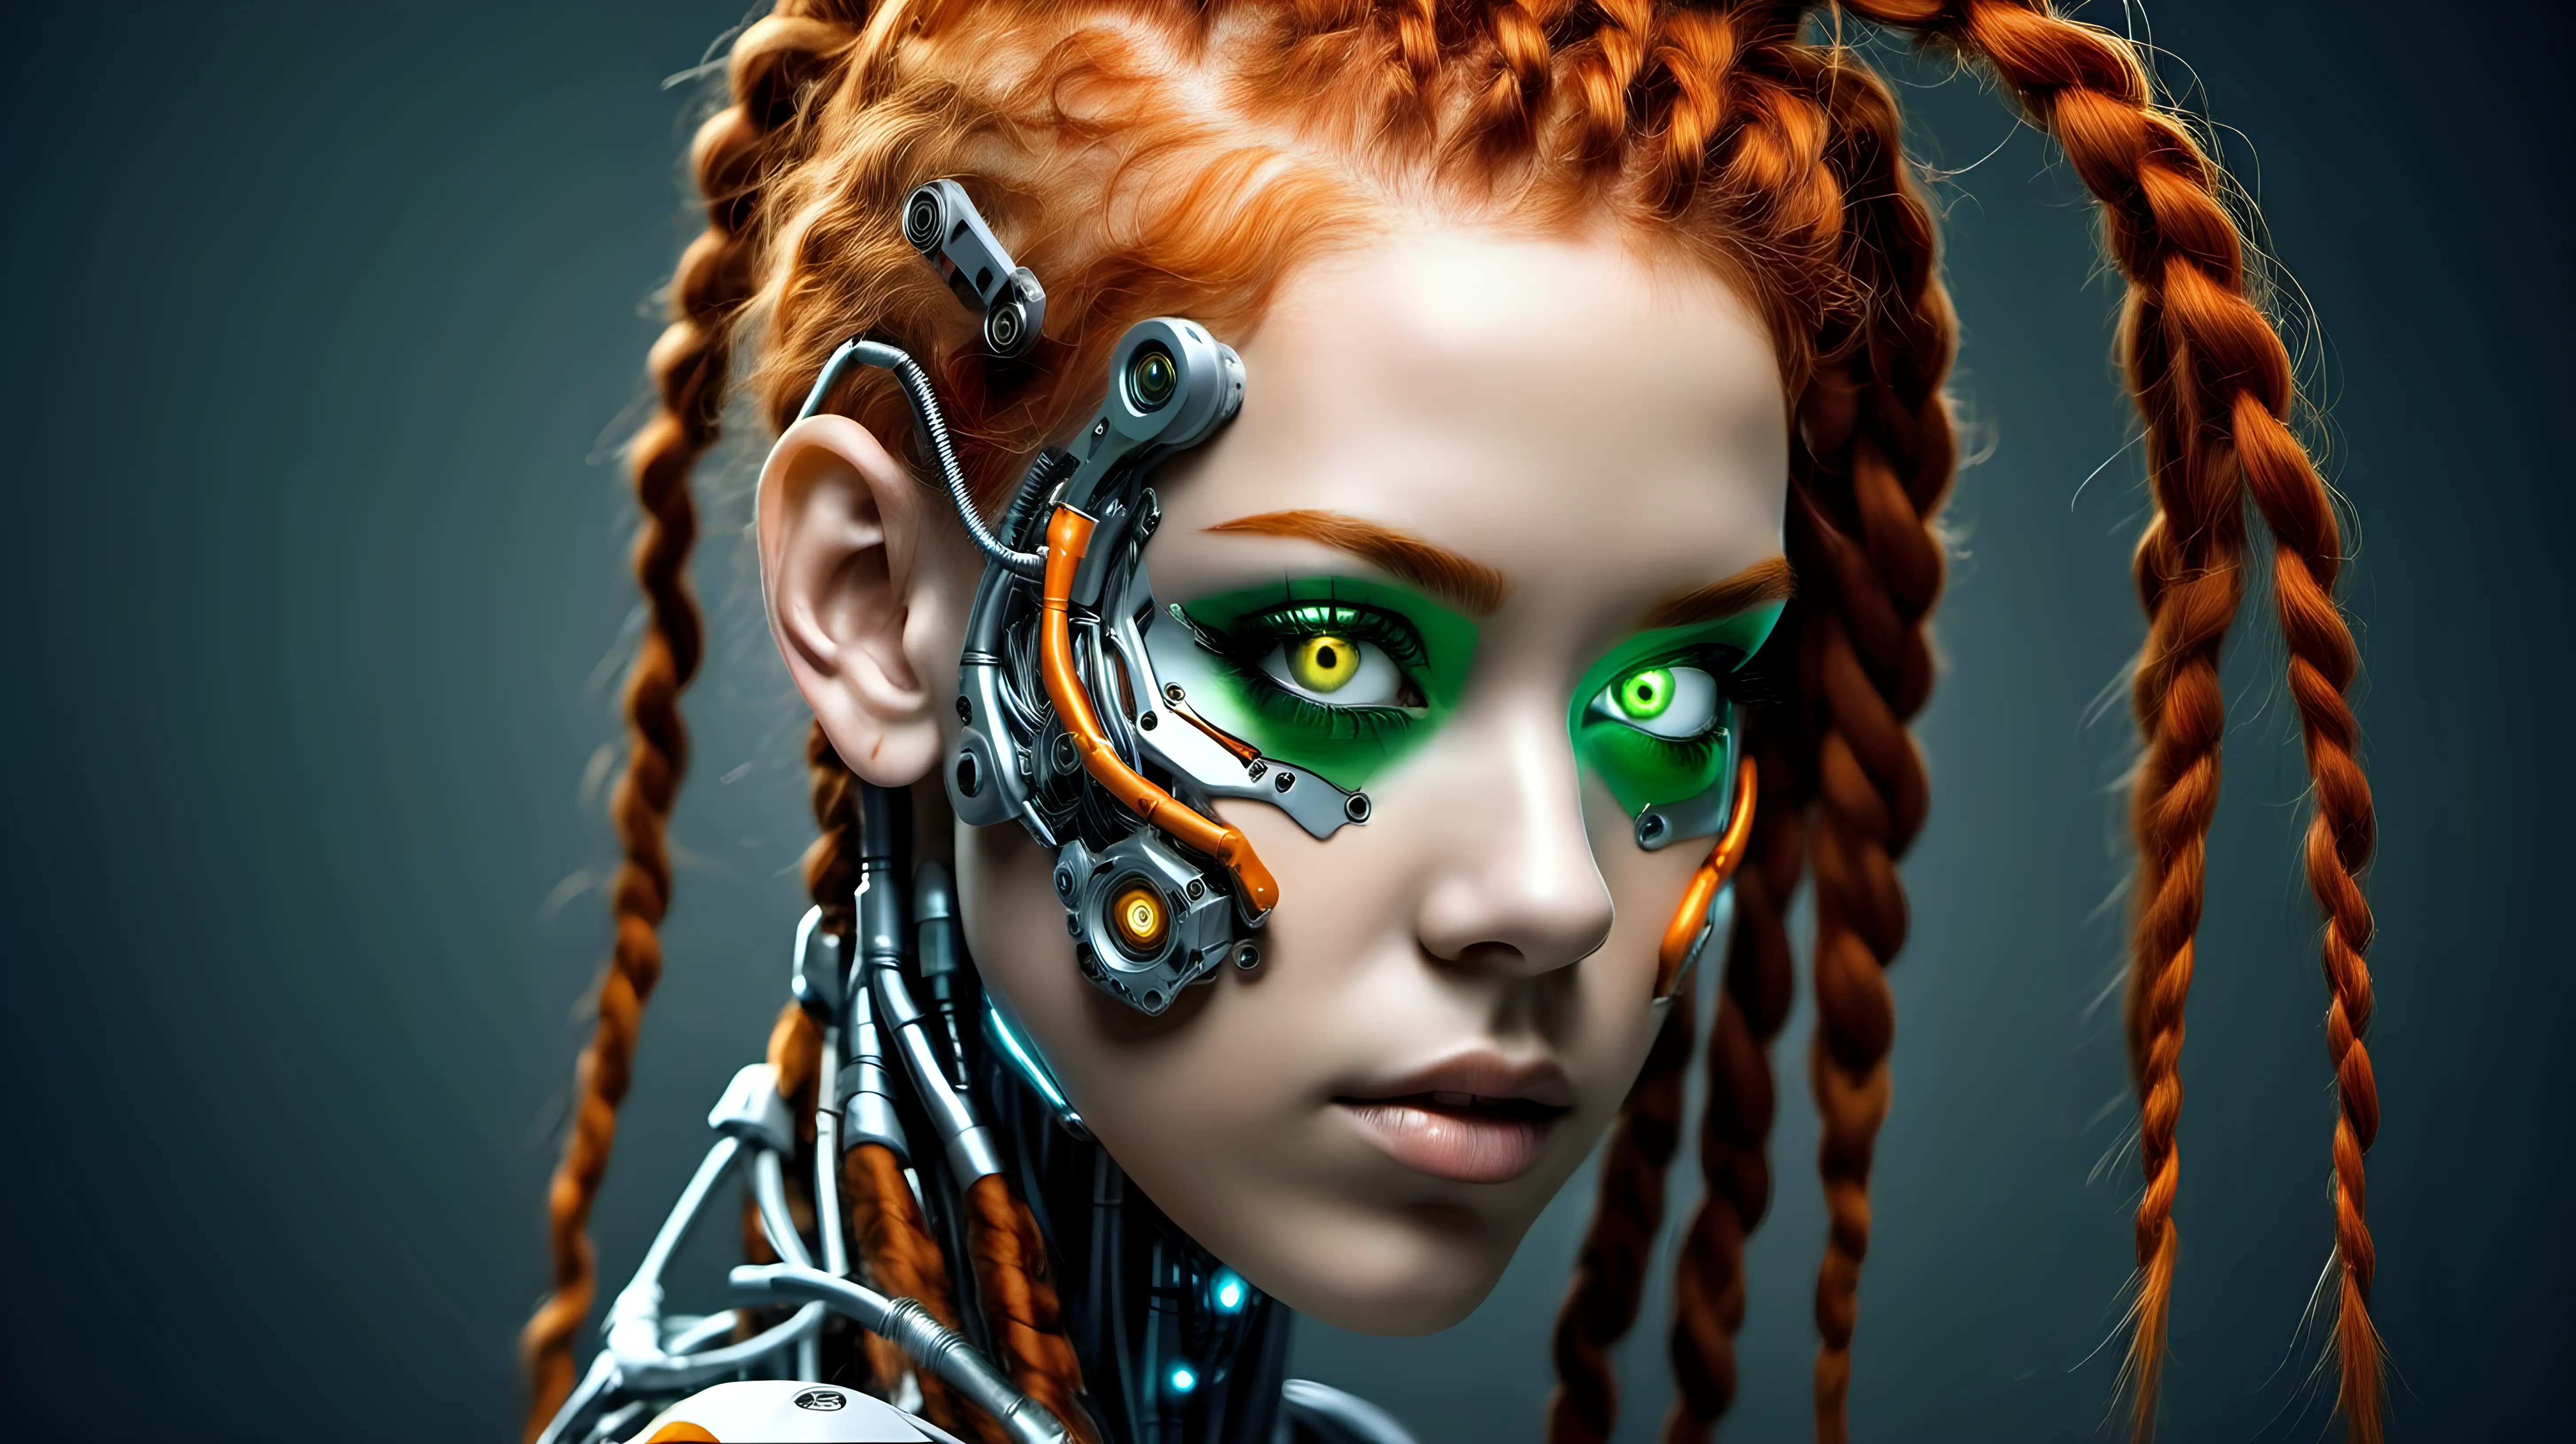 Beautiful Cyborg Woman with Orange Wild Hair and Green Eyes